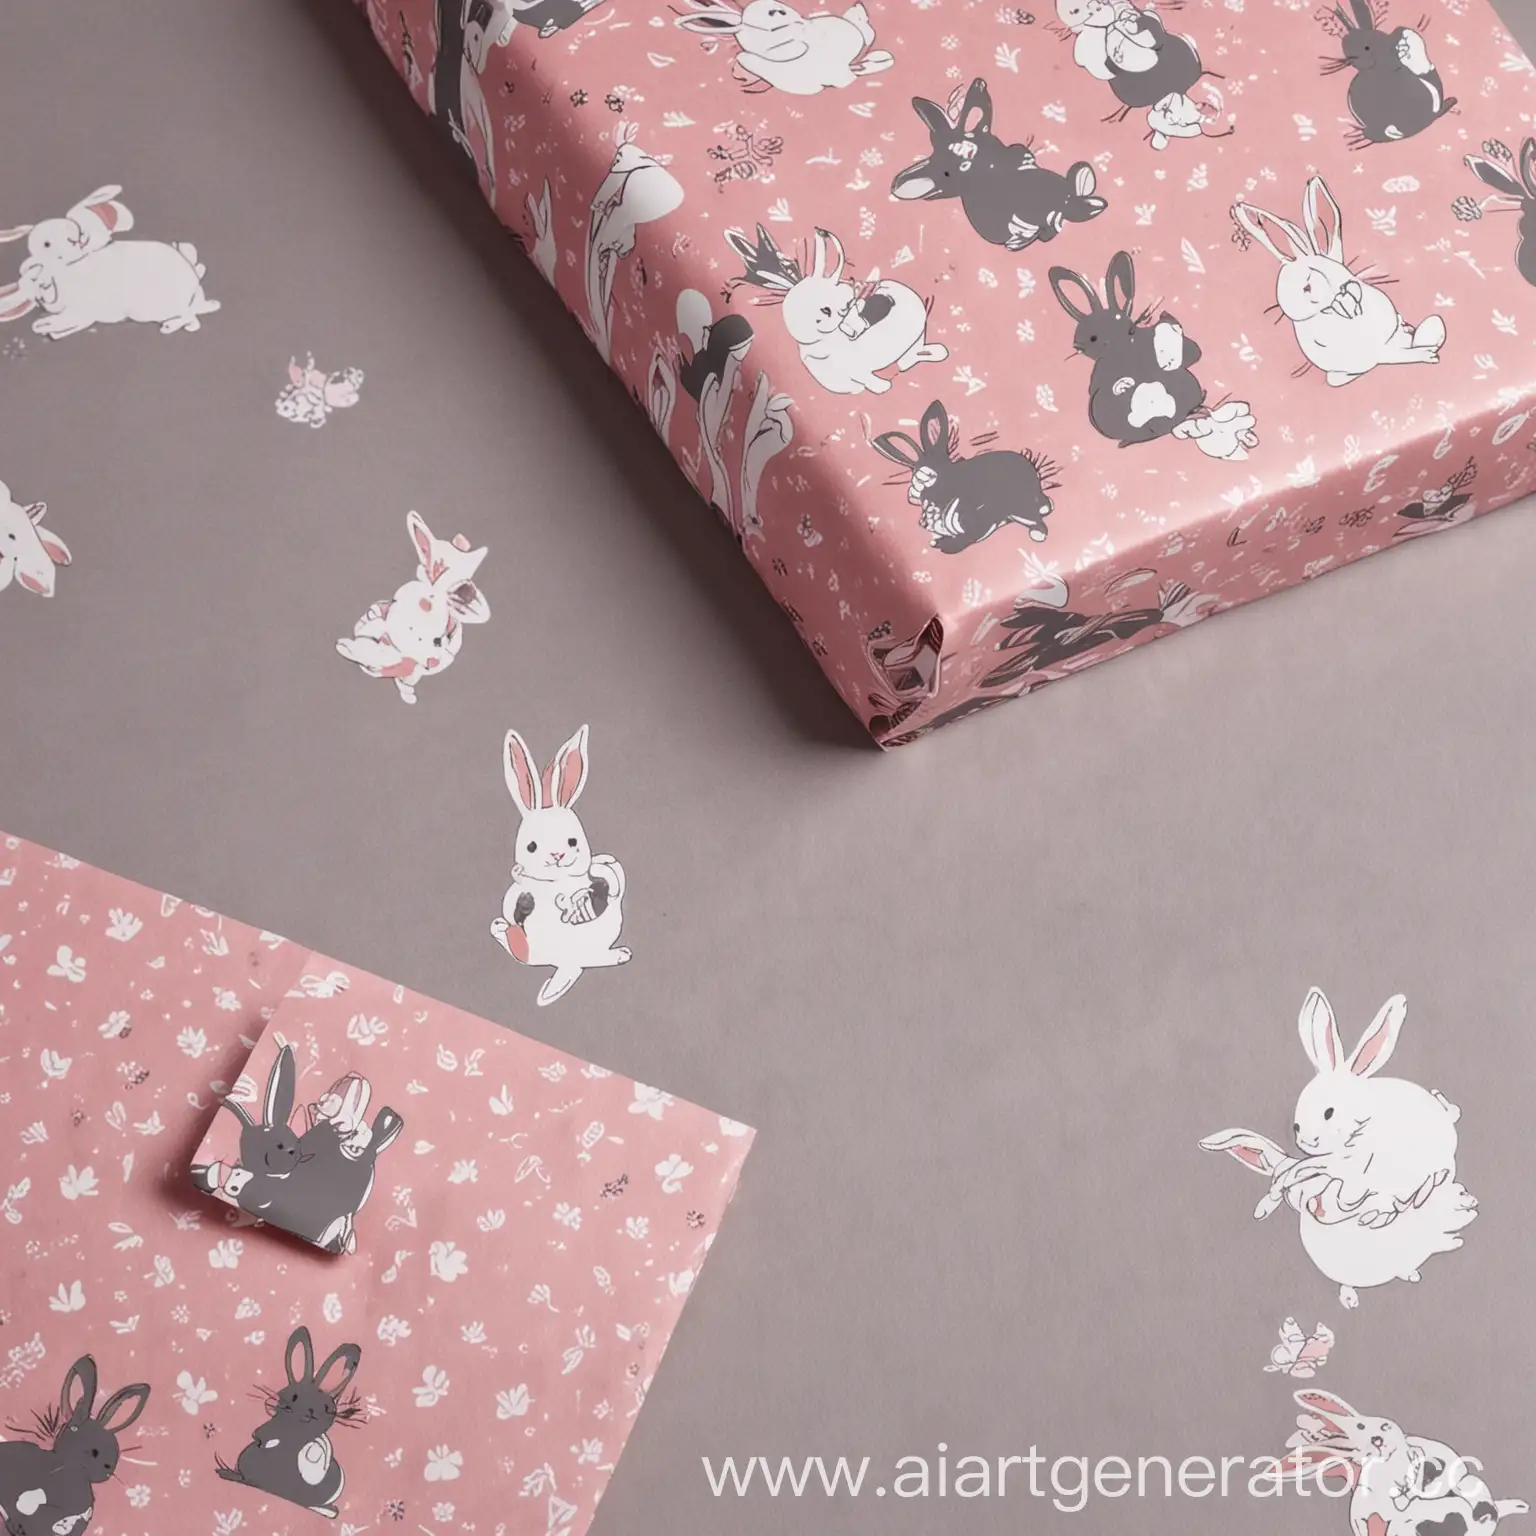 Adorable-BunnyThemed-Packaging-Paper-in-Subtle-GrayPink-Tones